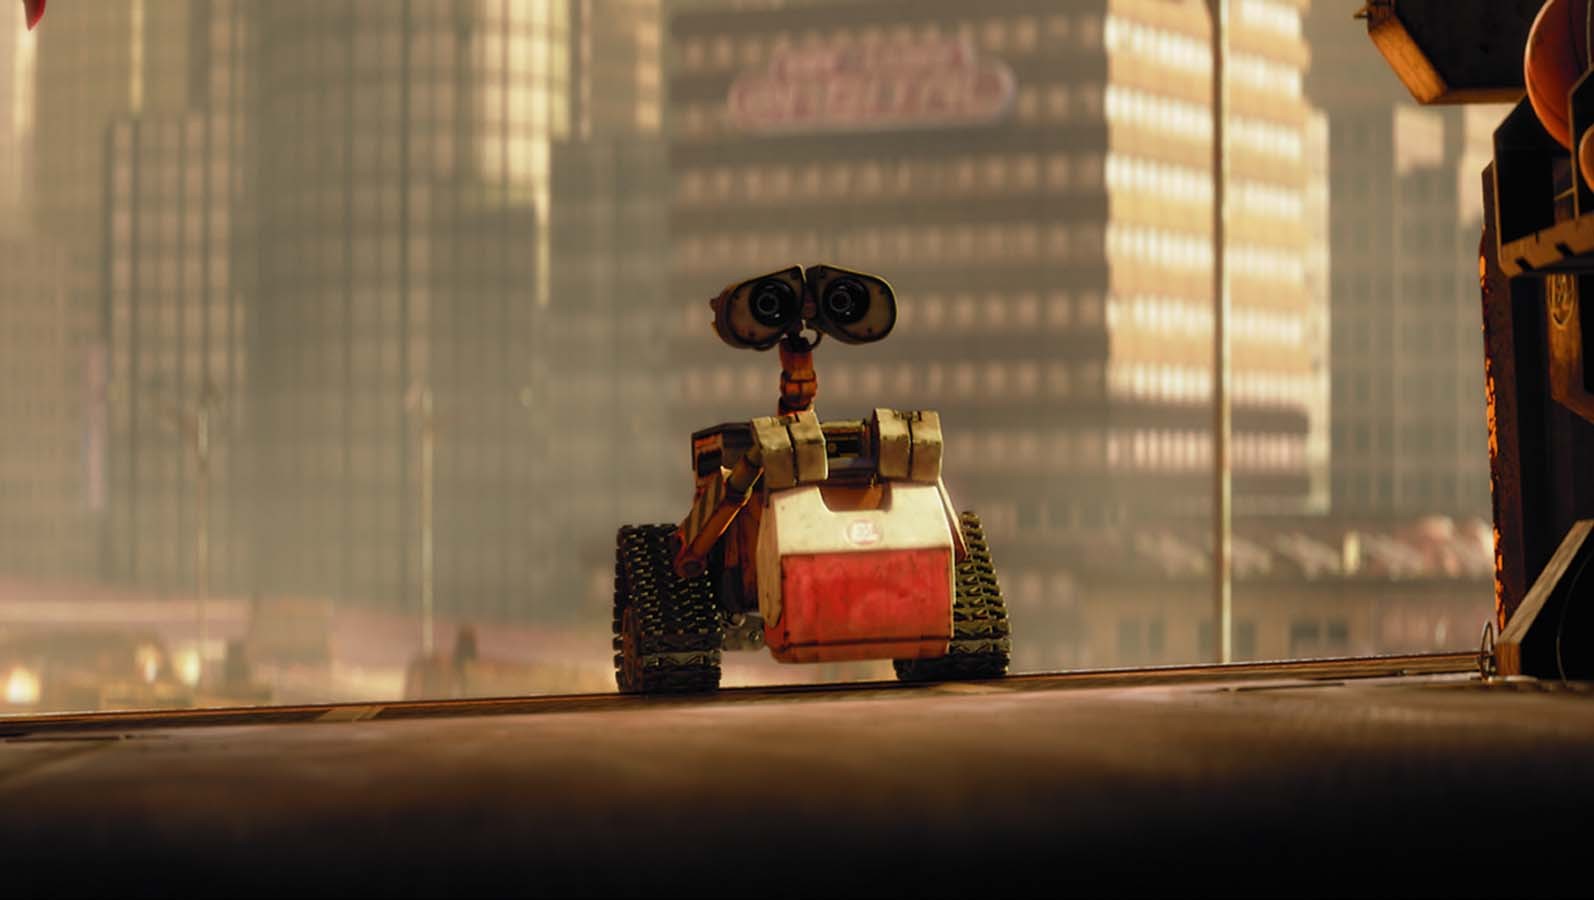 General 1594x900 WALL-E movies animated movies robot Pixar Animation Studios movie scenes